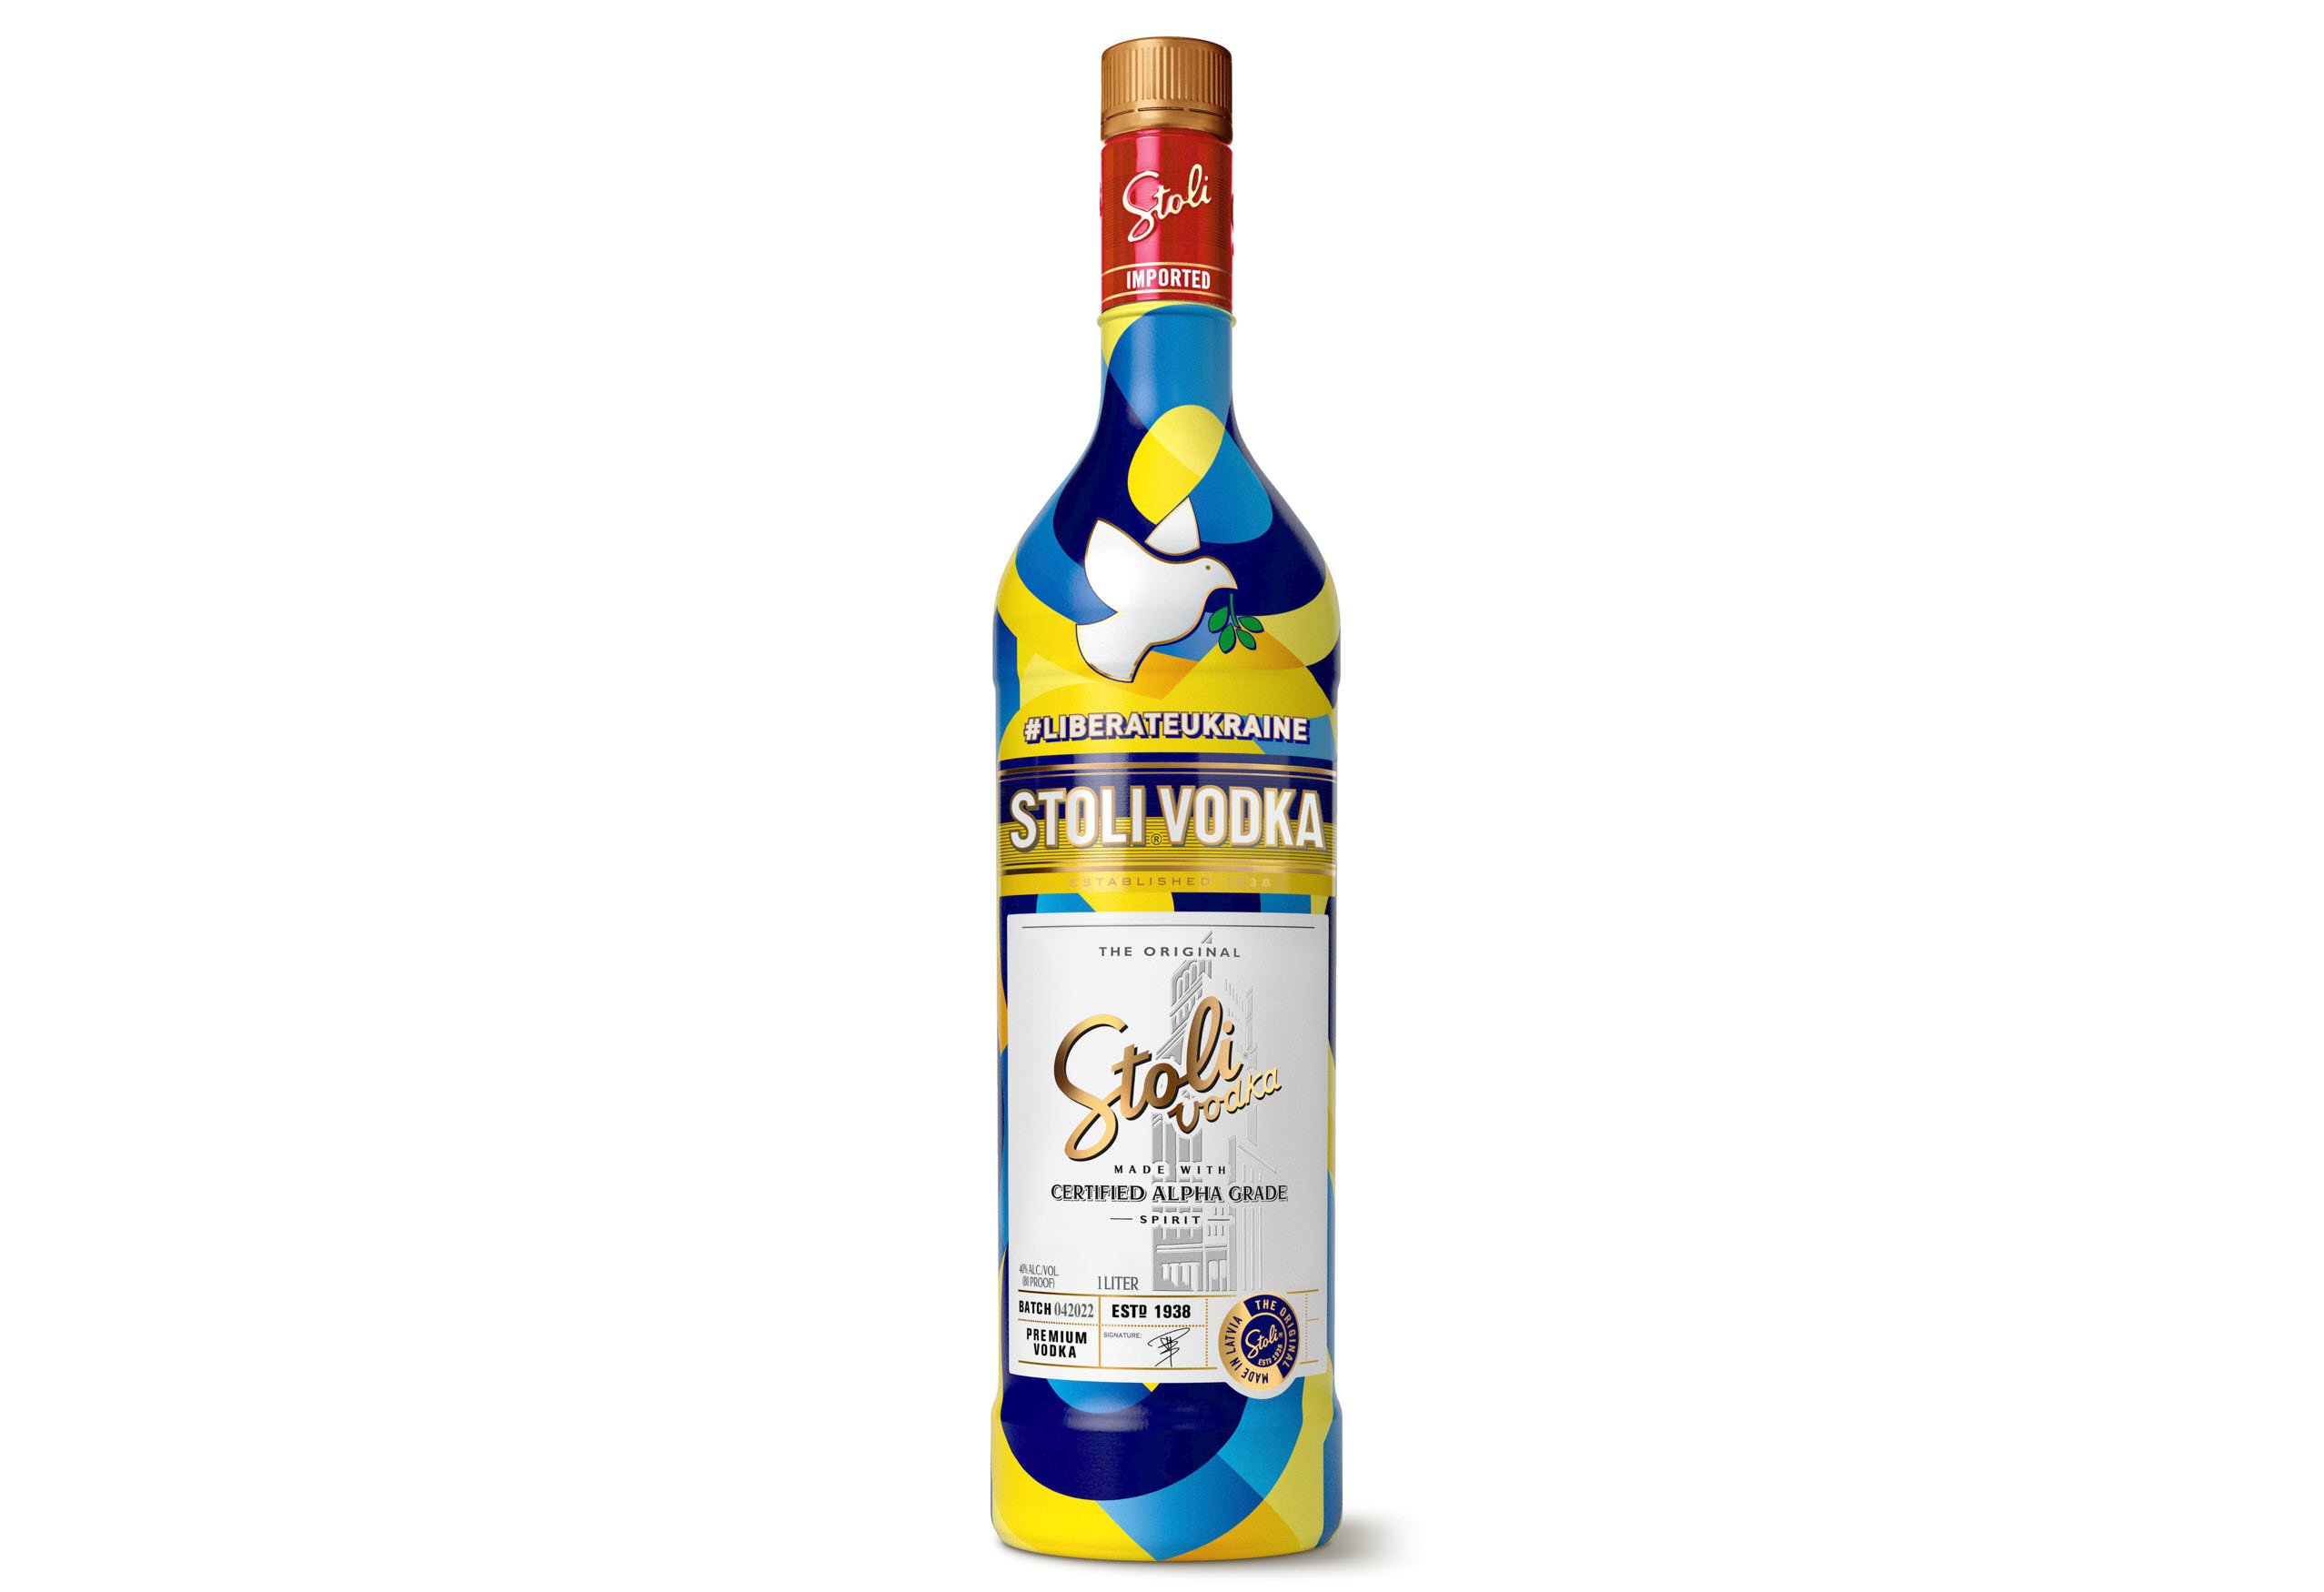 Stoli Group - Limited Edition Bottle for Ukraine